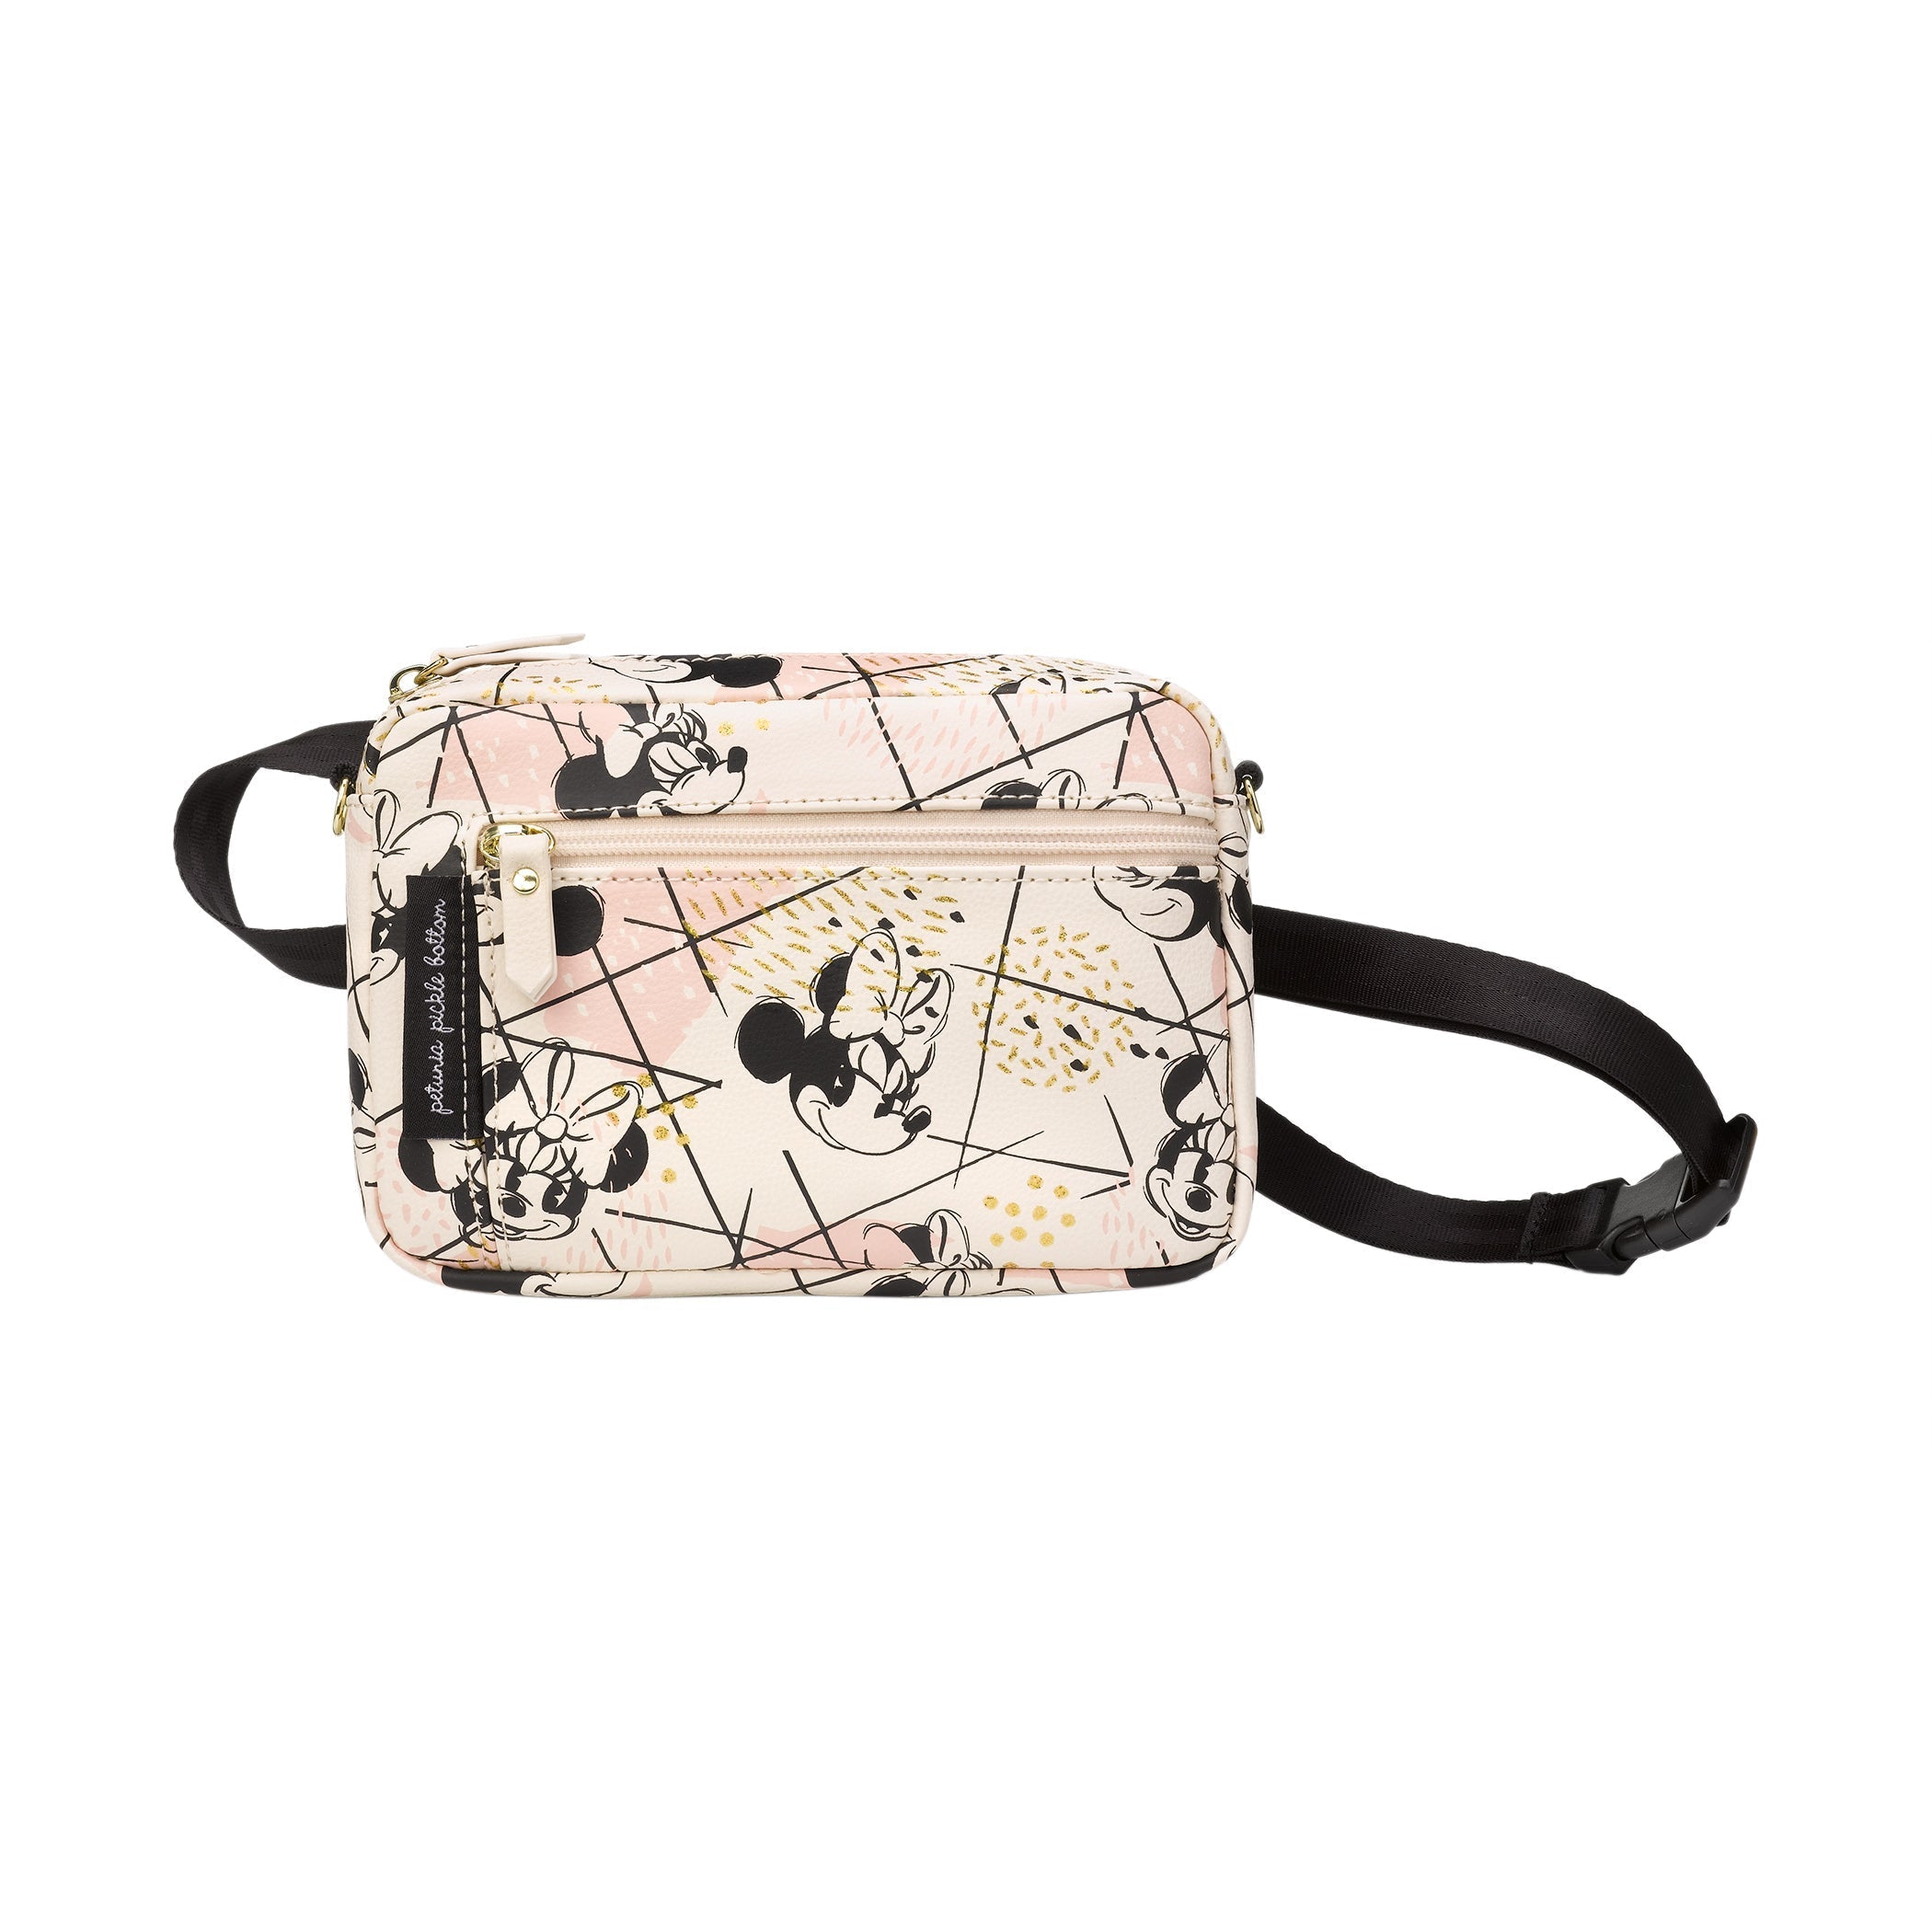 Petunia Pickle Bottom Adventurer Belt Bag in Shimmery Minnie Mouse